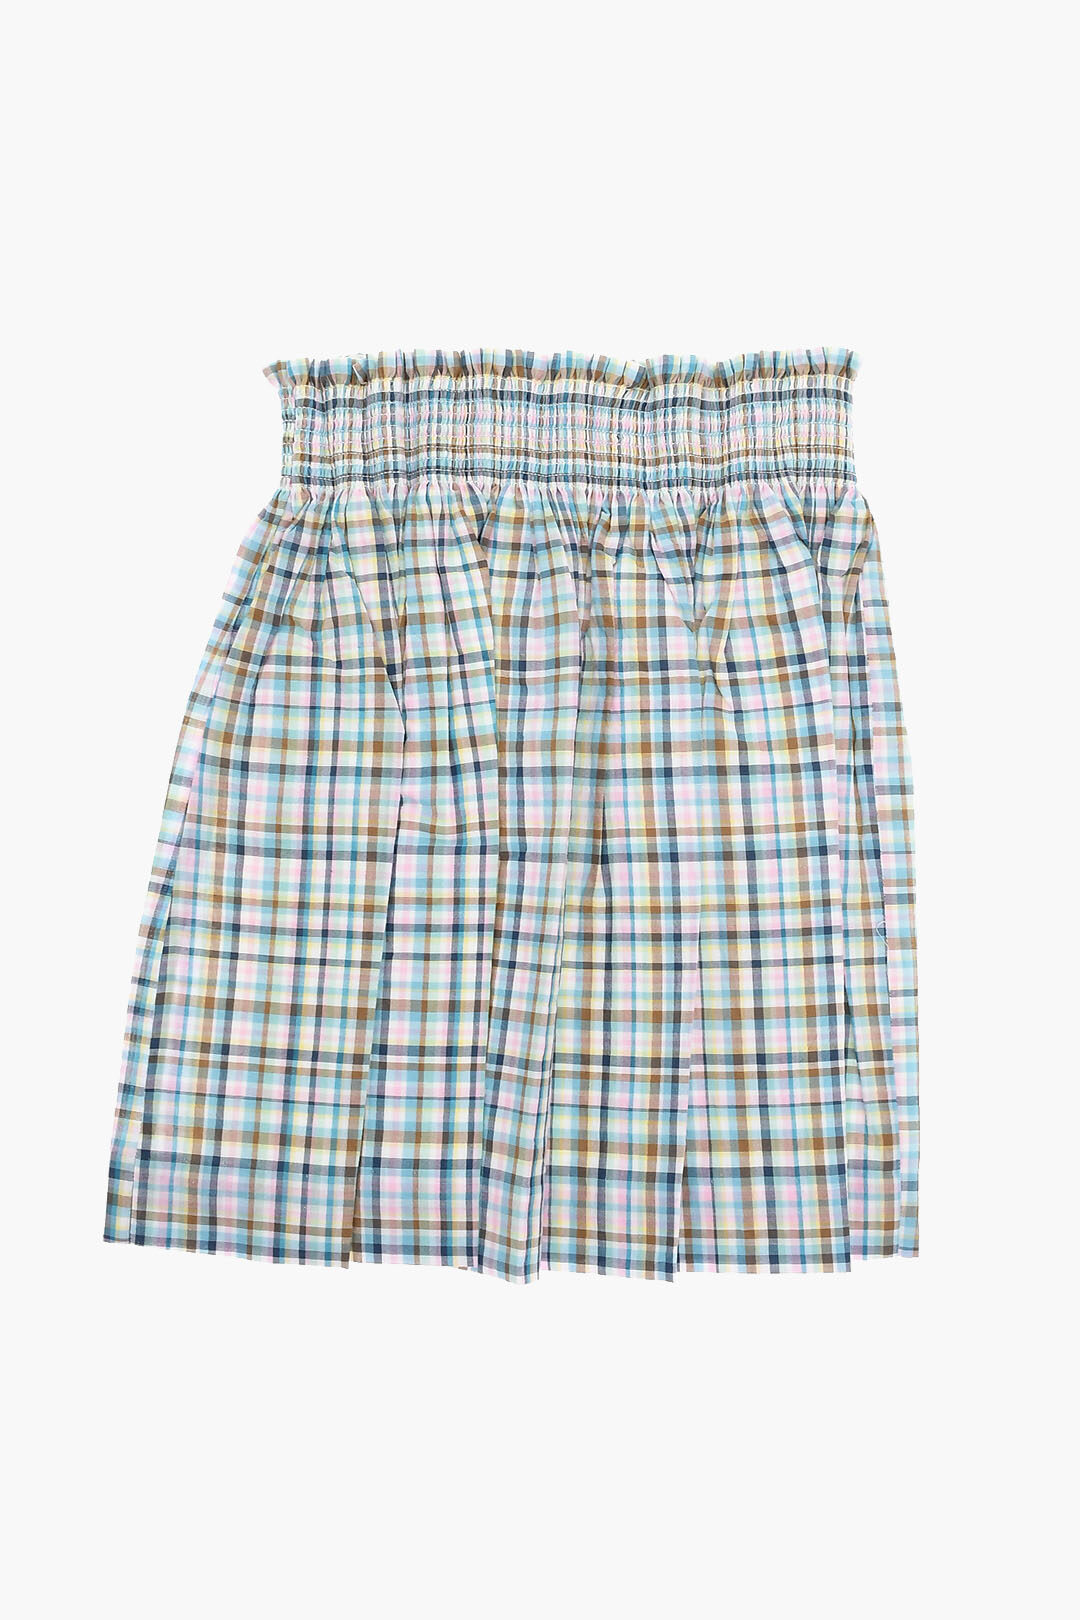 Bonpoint Checkered NOUMEA Flared Long Skirt girls - Glamood Outlet